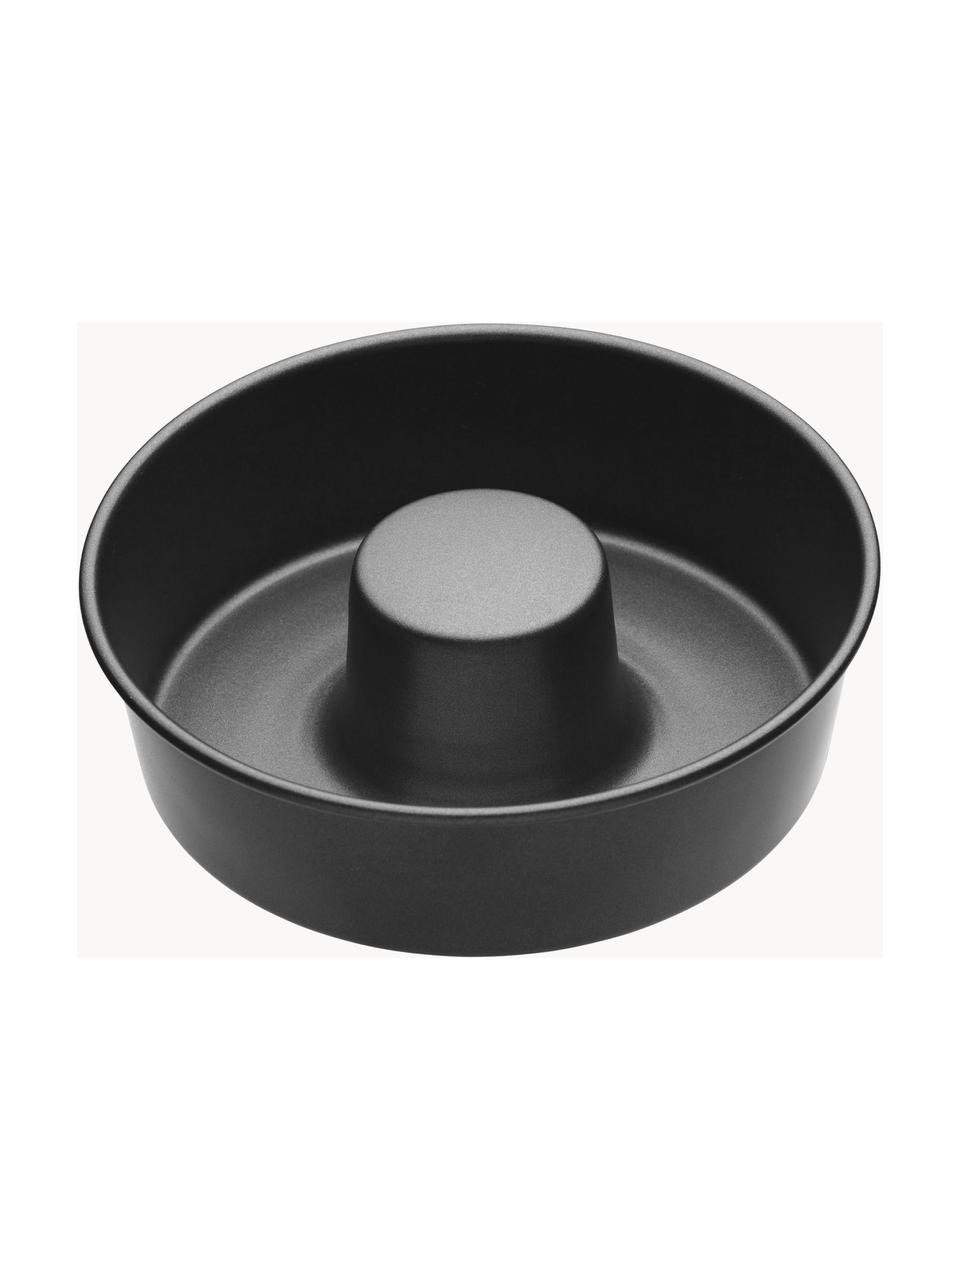 Runde Backform MasterClass mit Antihaft-Beschichtung, Carbonstahl mit Antihaft-Beschichtung, Schwarz, Ø 20 x H 6 cm